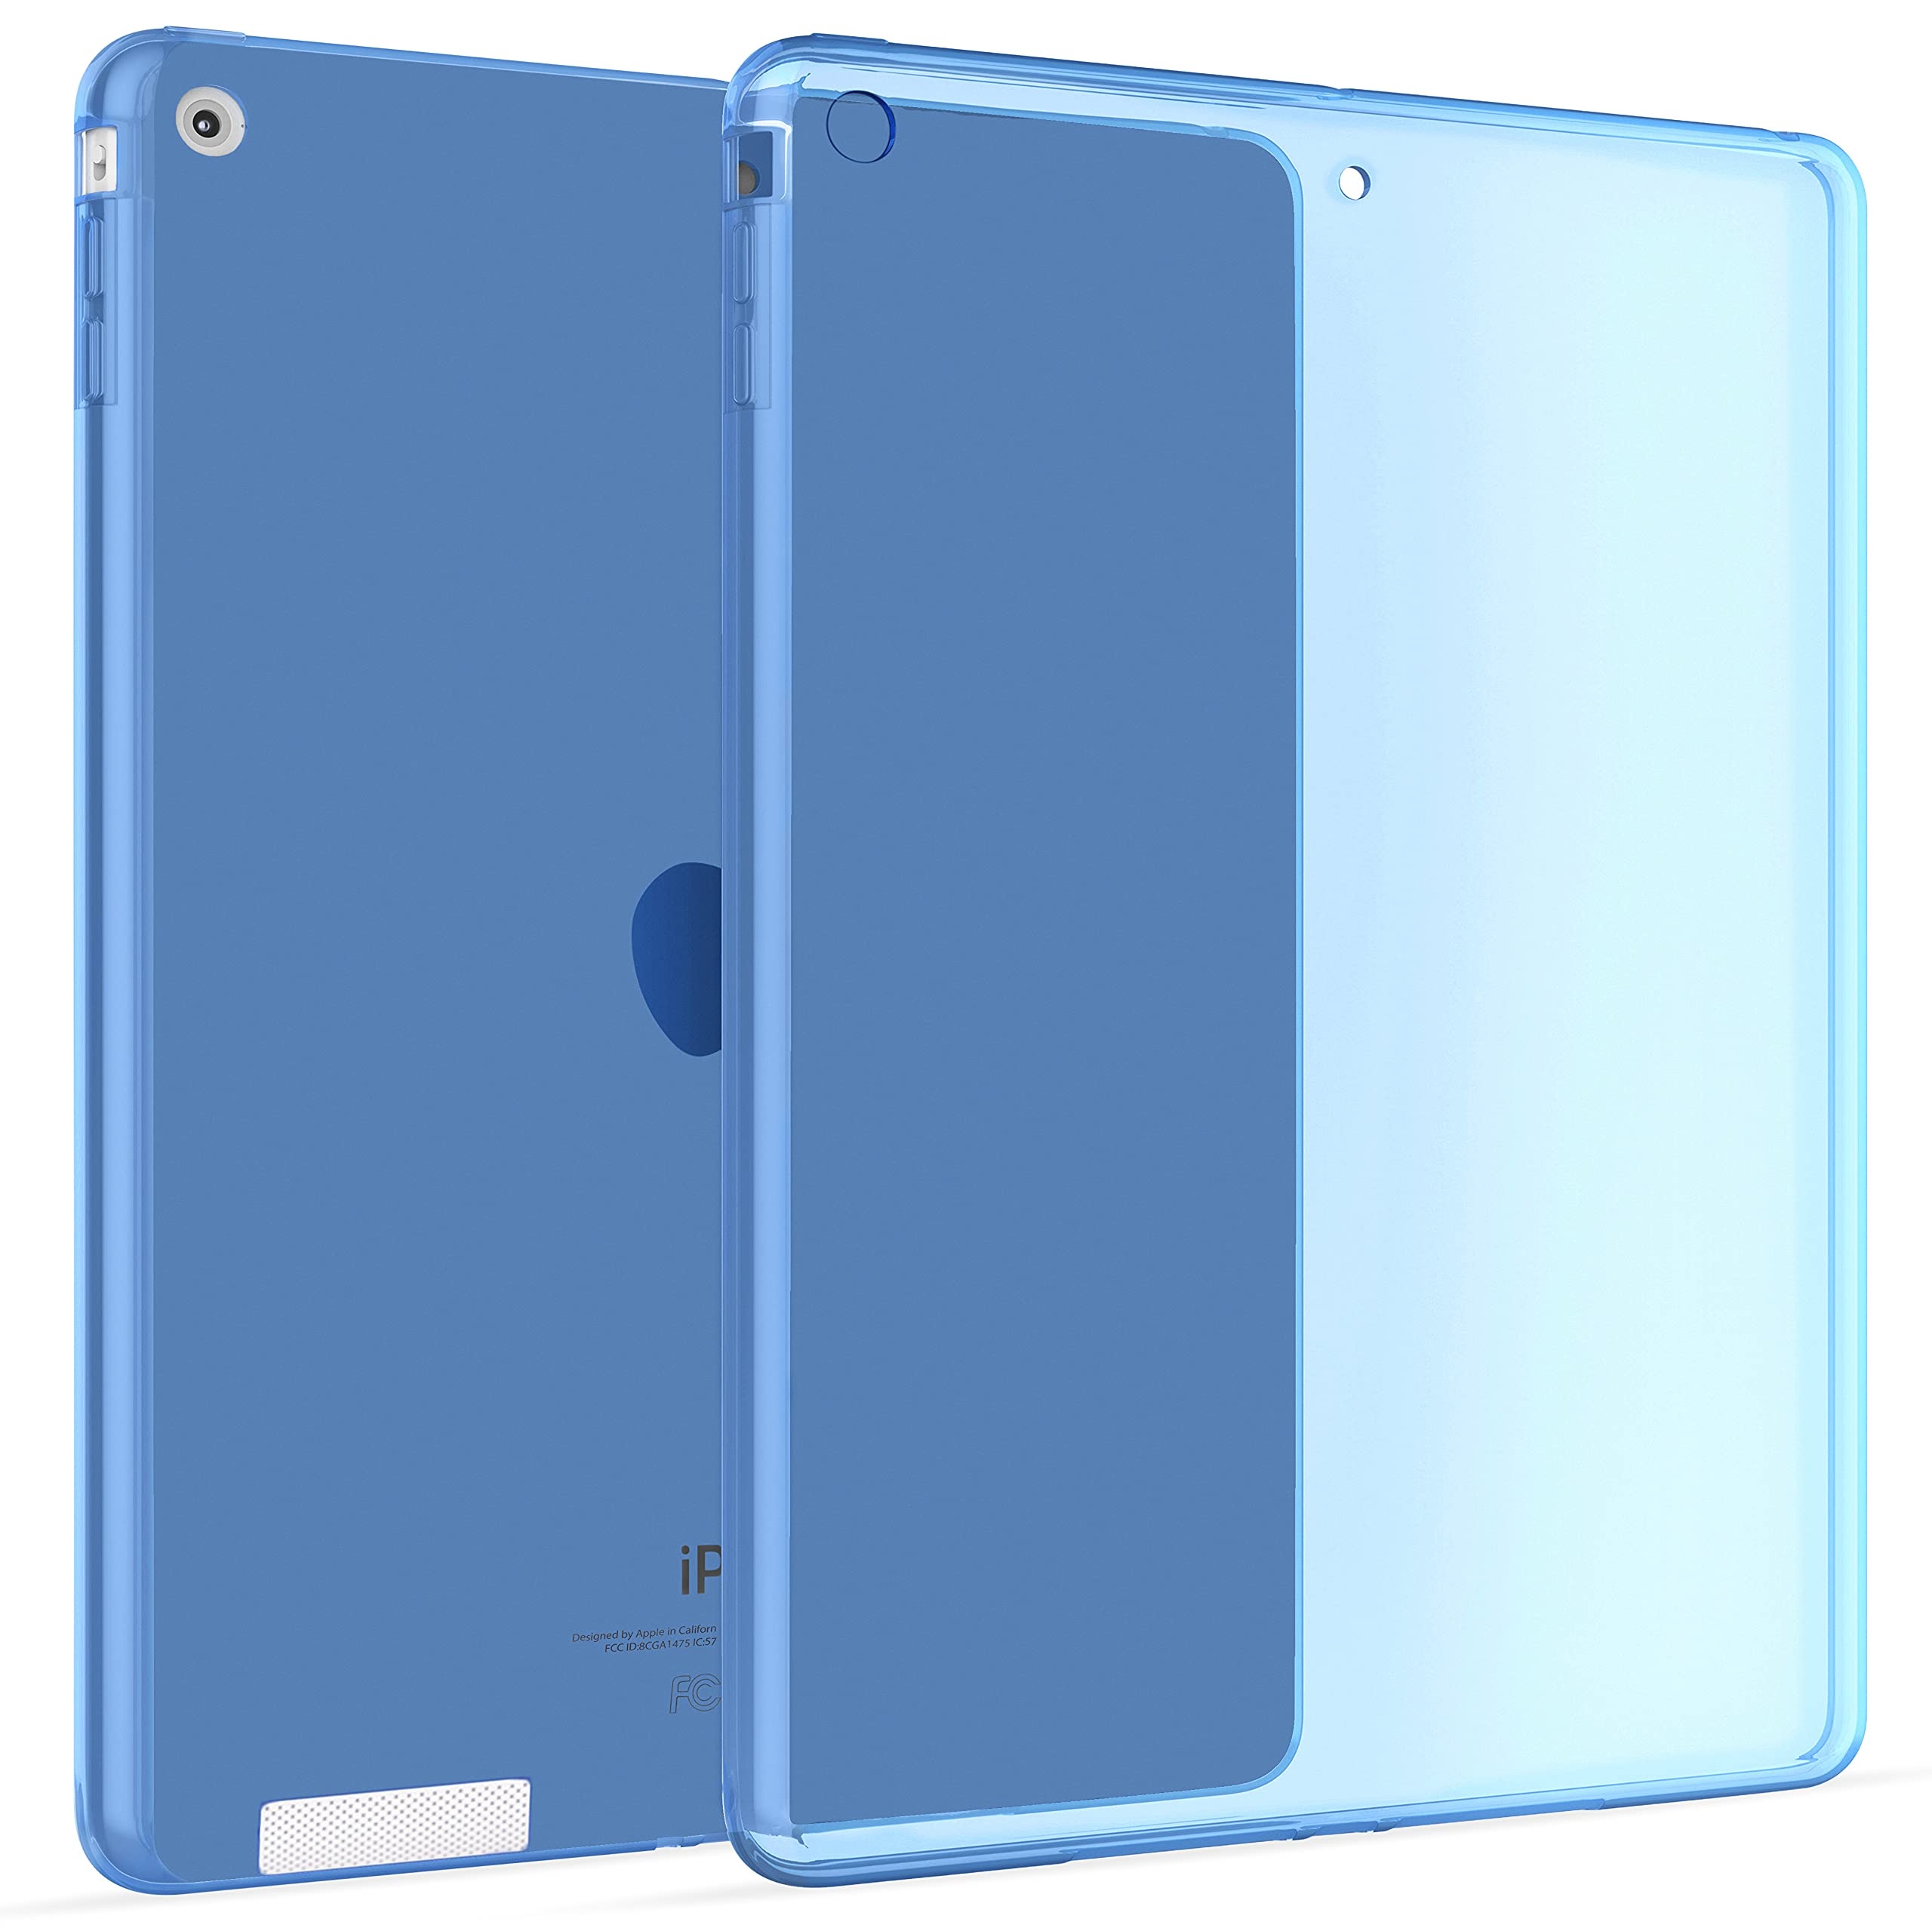 Okuli Hülle Kompatibel mit Apple iPad 2, iPad 3, iPad 4 - Transparent Silikon Cover Case Schutzhülle in Blau